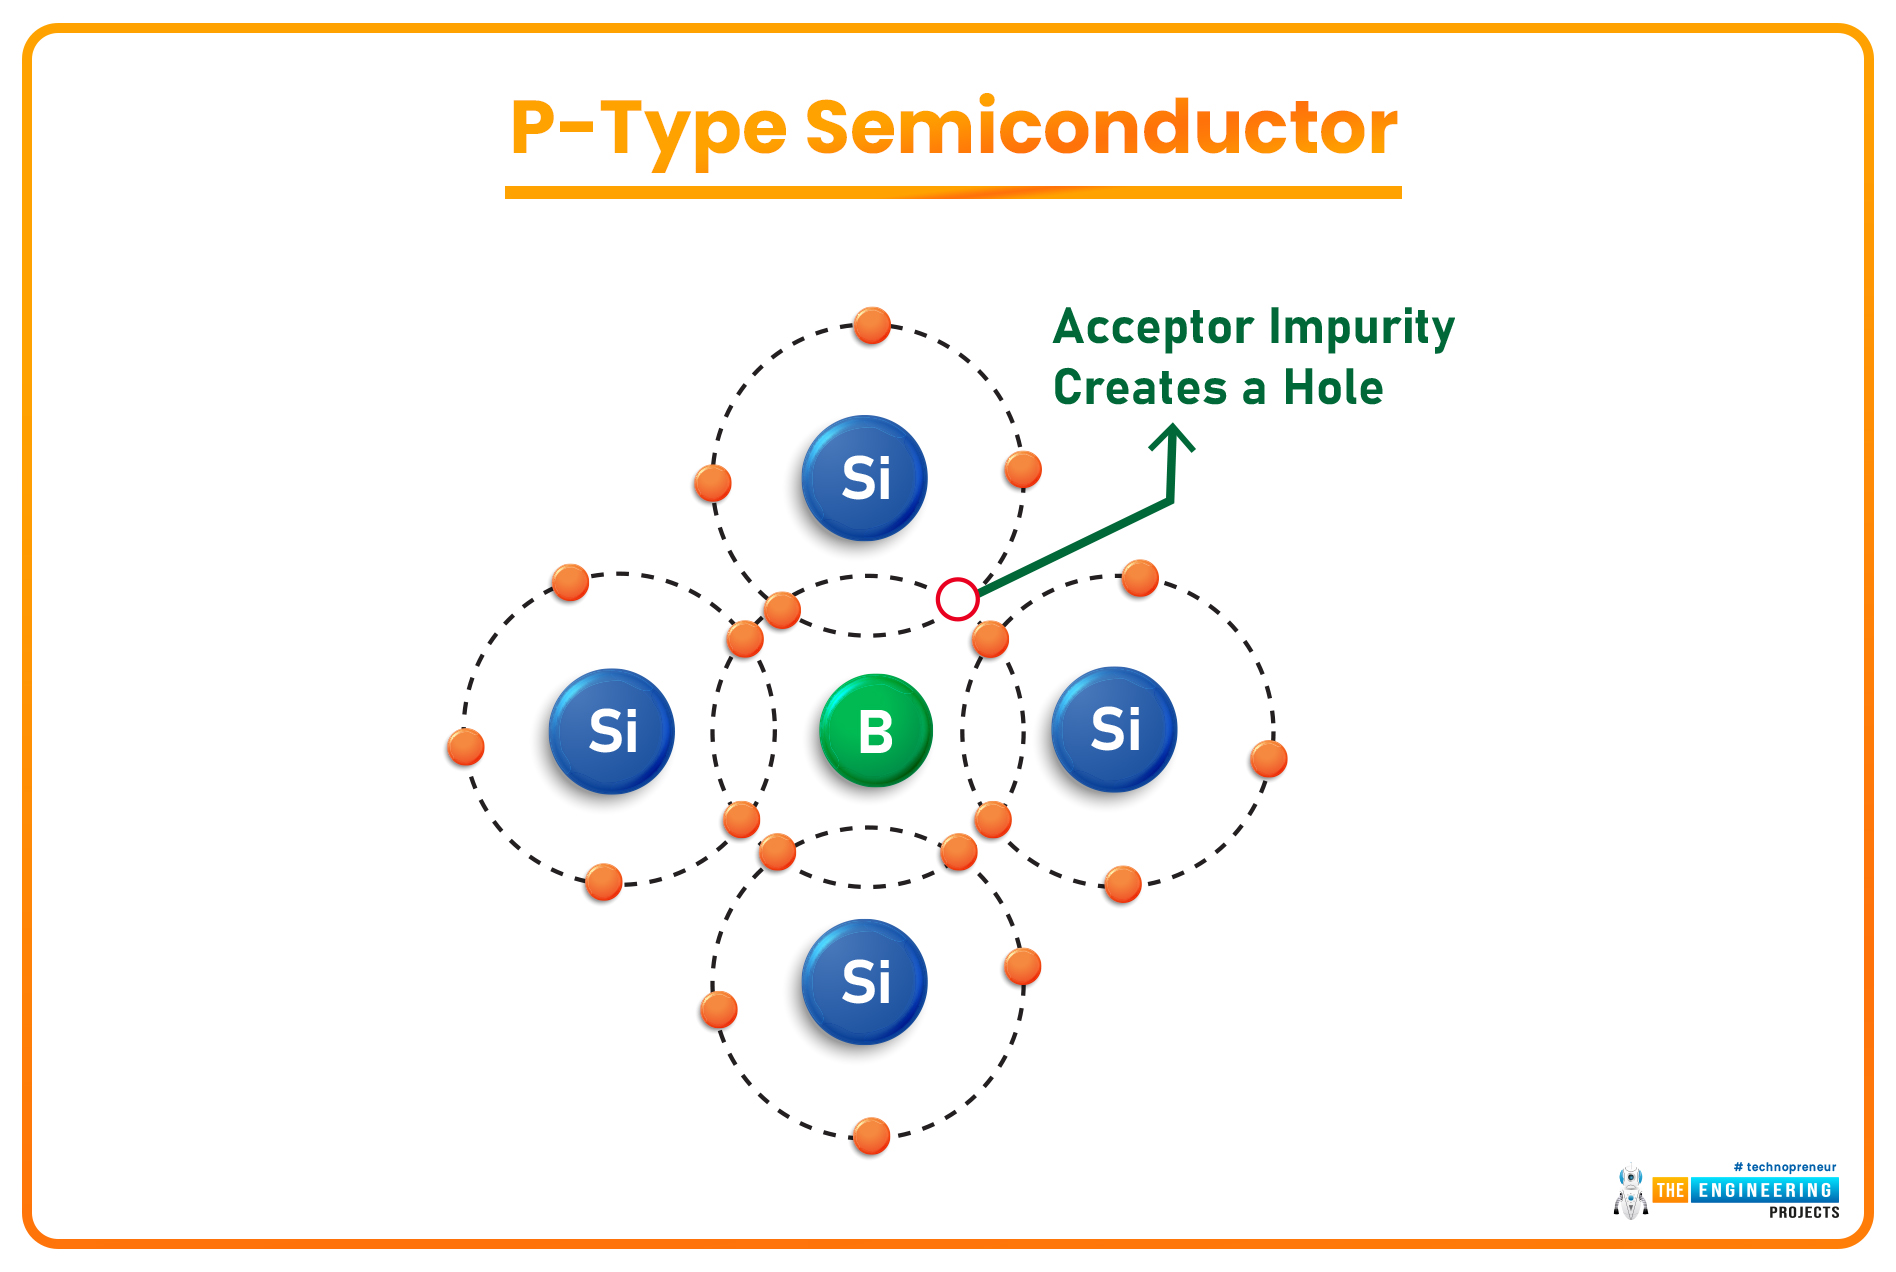 pn junction, n type semiconductor, p type semiconductor, silicon crystal, doing, impurities, reverse bias, forward bias junction